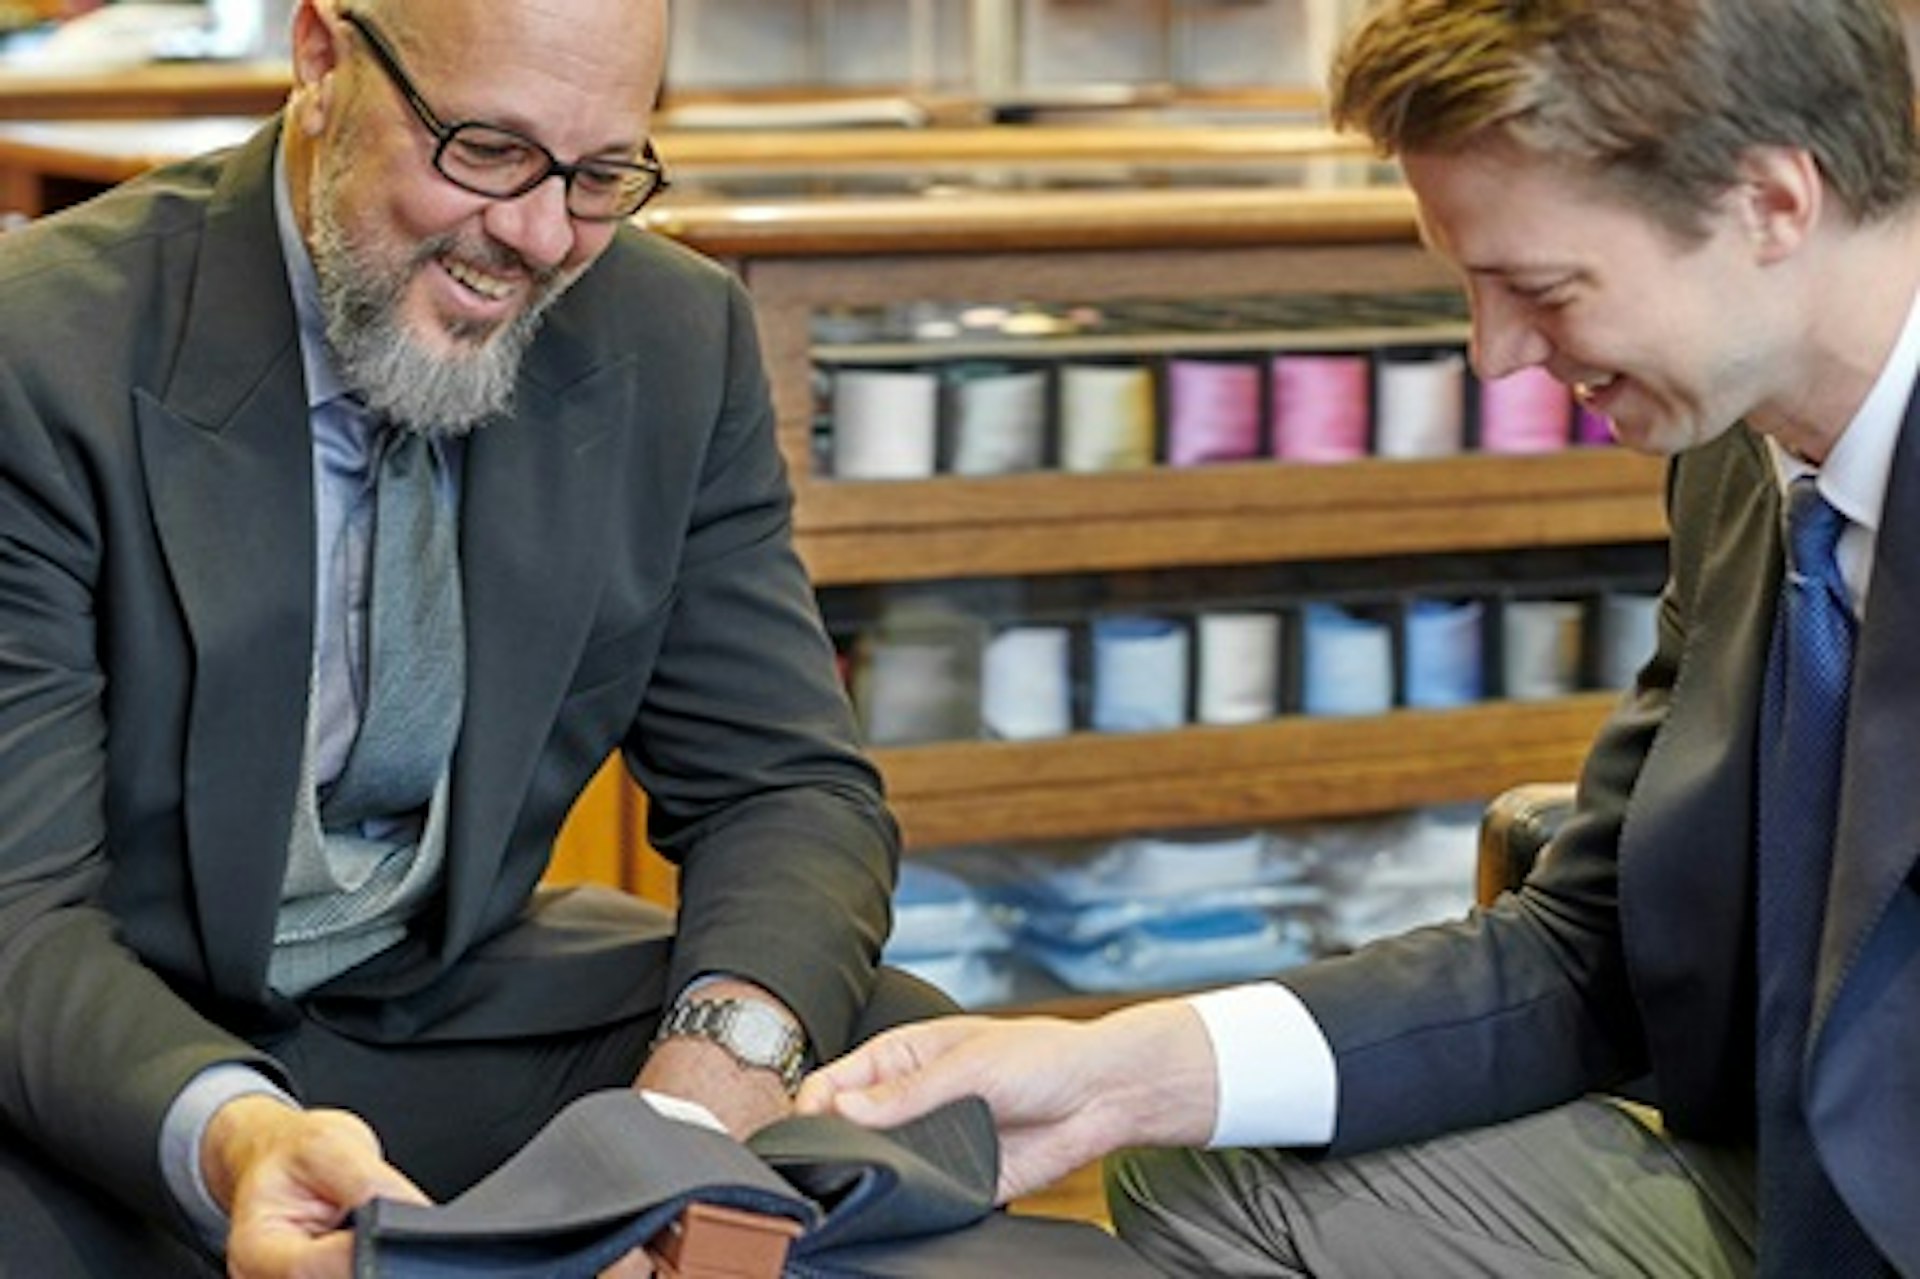 Semi-Bespoke Tailored Gentleman's Suit Experience at The Savile Row Company Custom Made 3